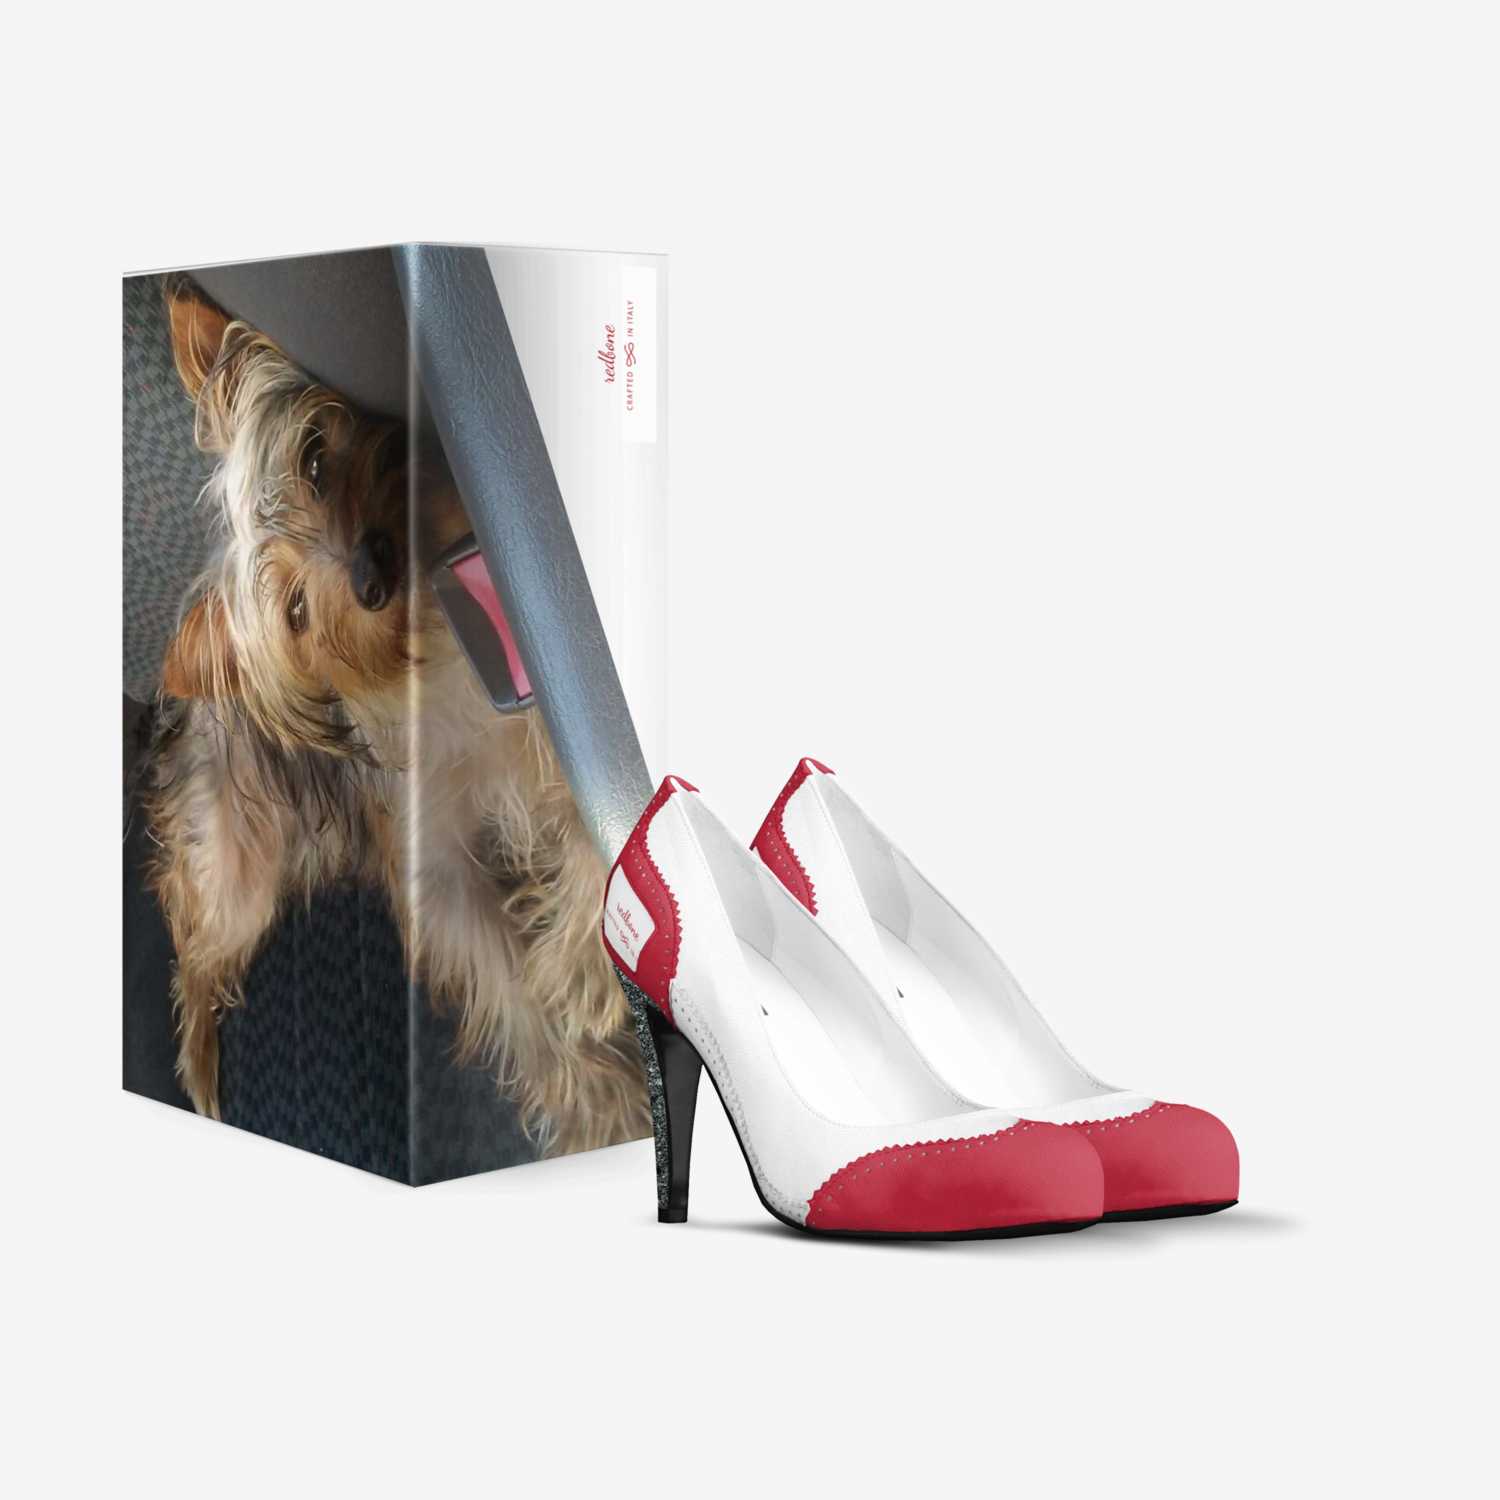 redbone custom made in Italy shoes by Moffatt Gordon | Box view